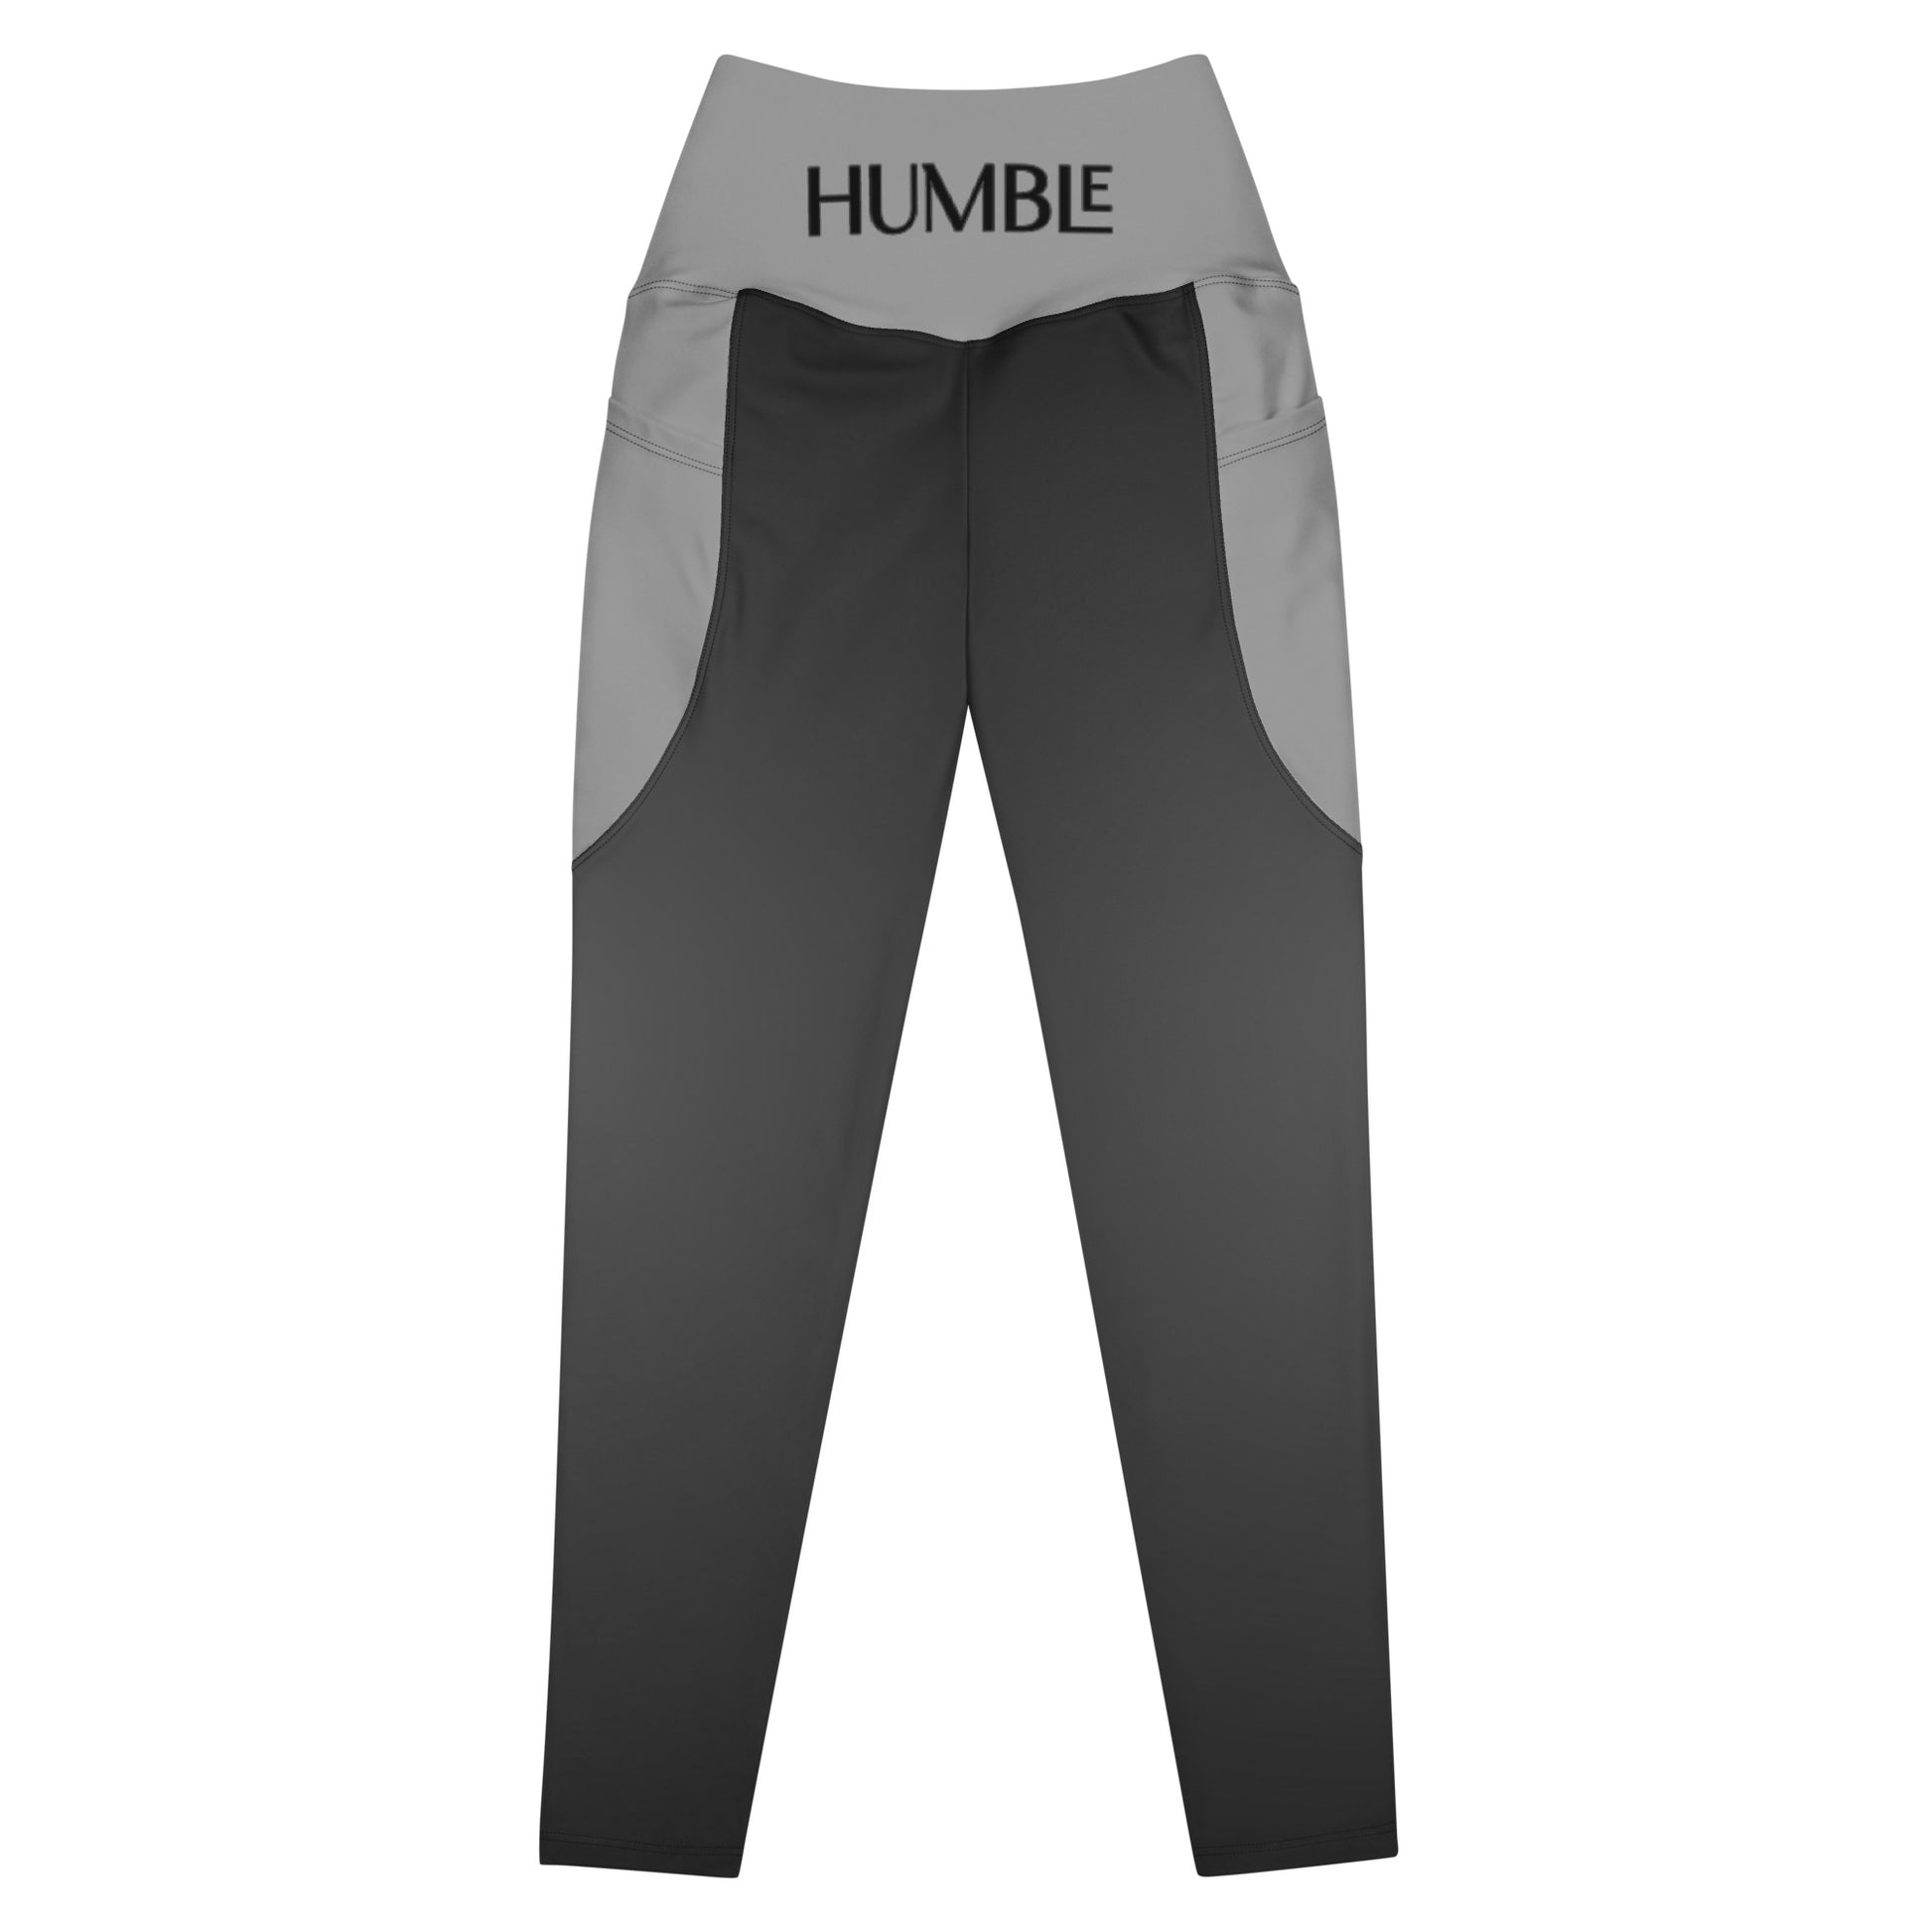 Humble Sportswear™ Women's Frost Black Active Compression Leggings - Mireille Fine Art